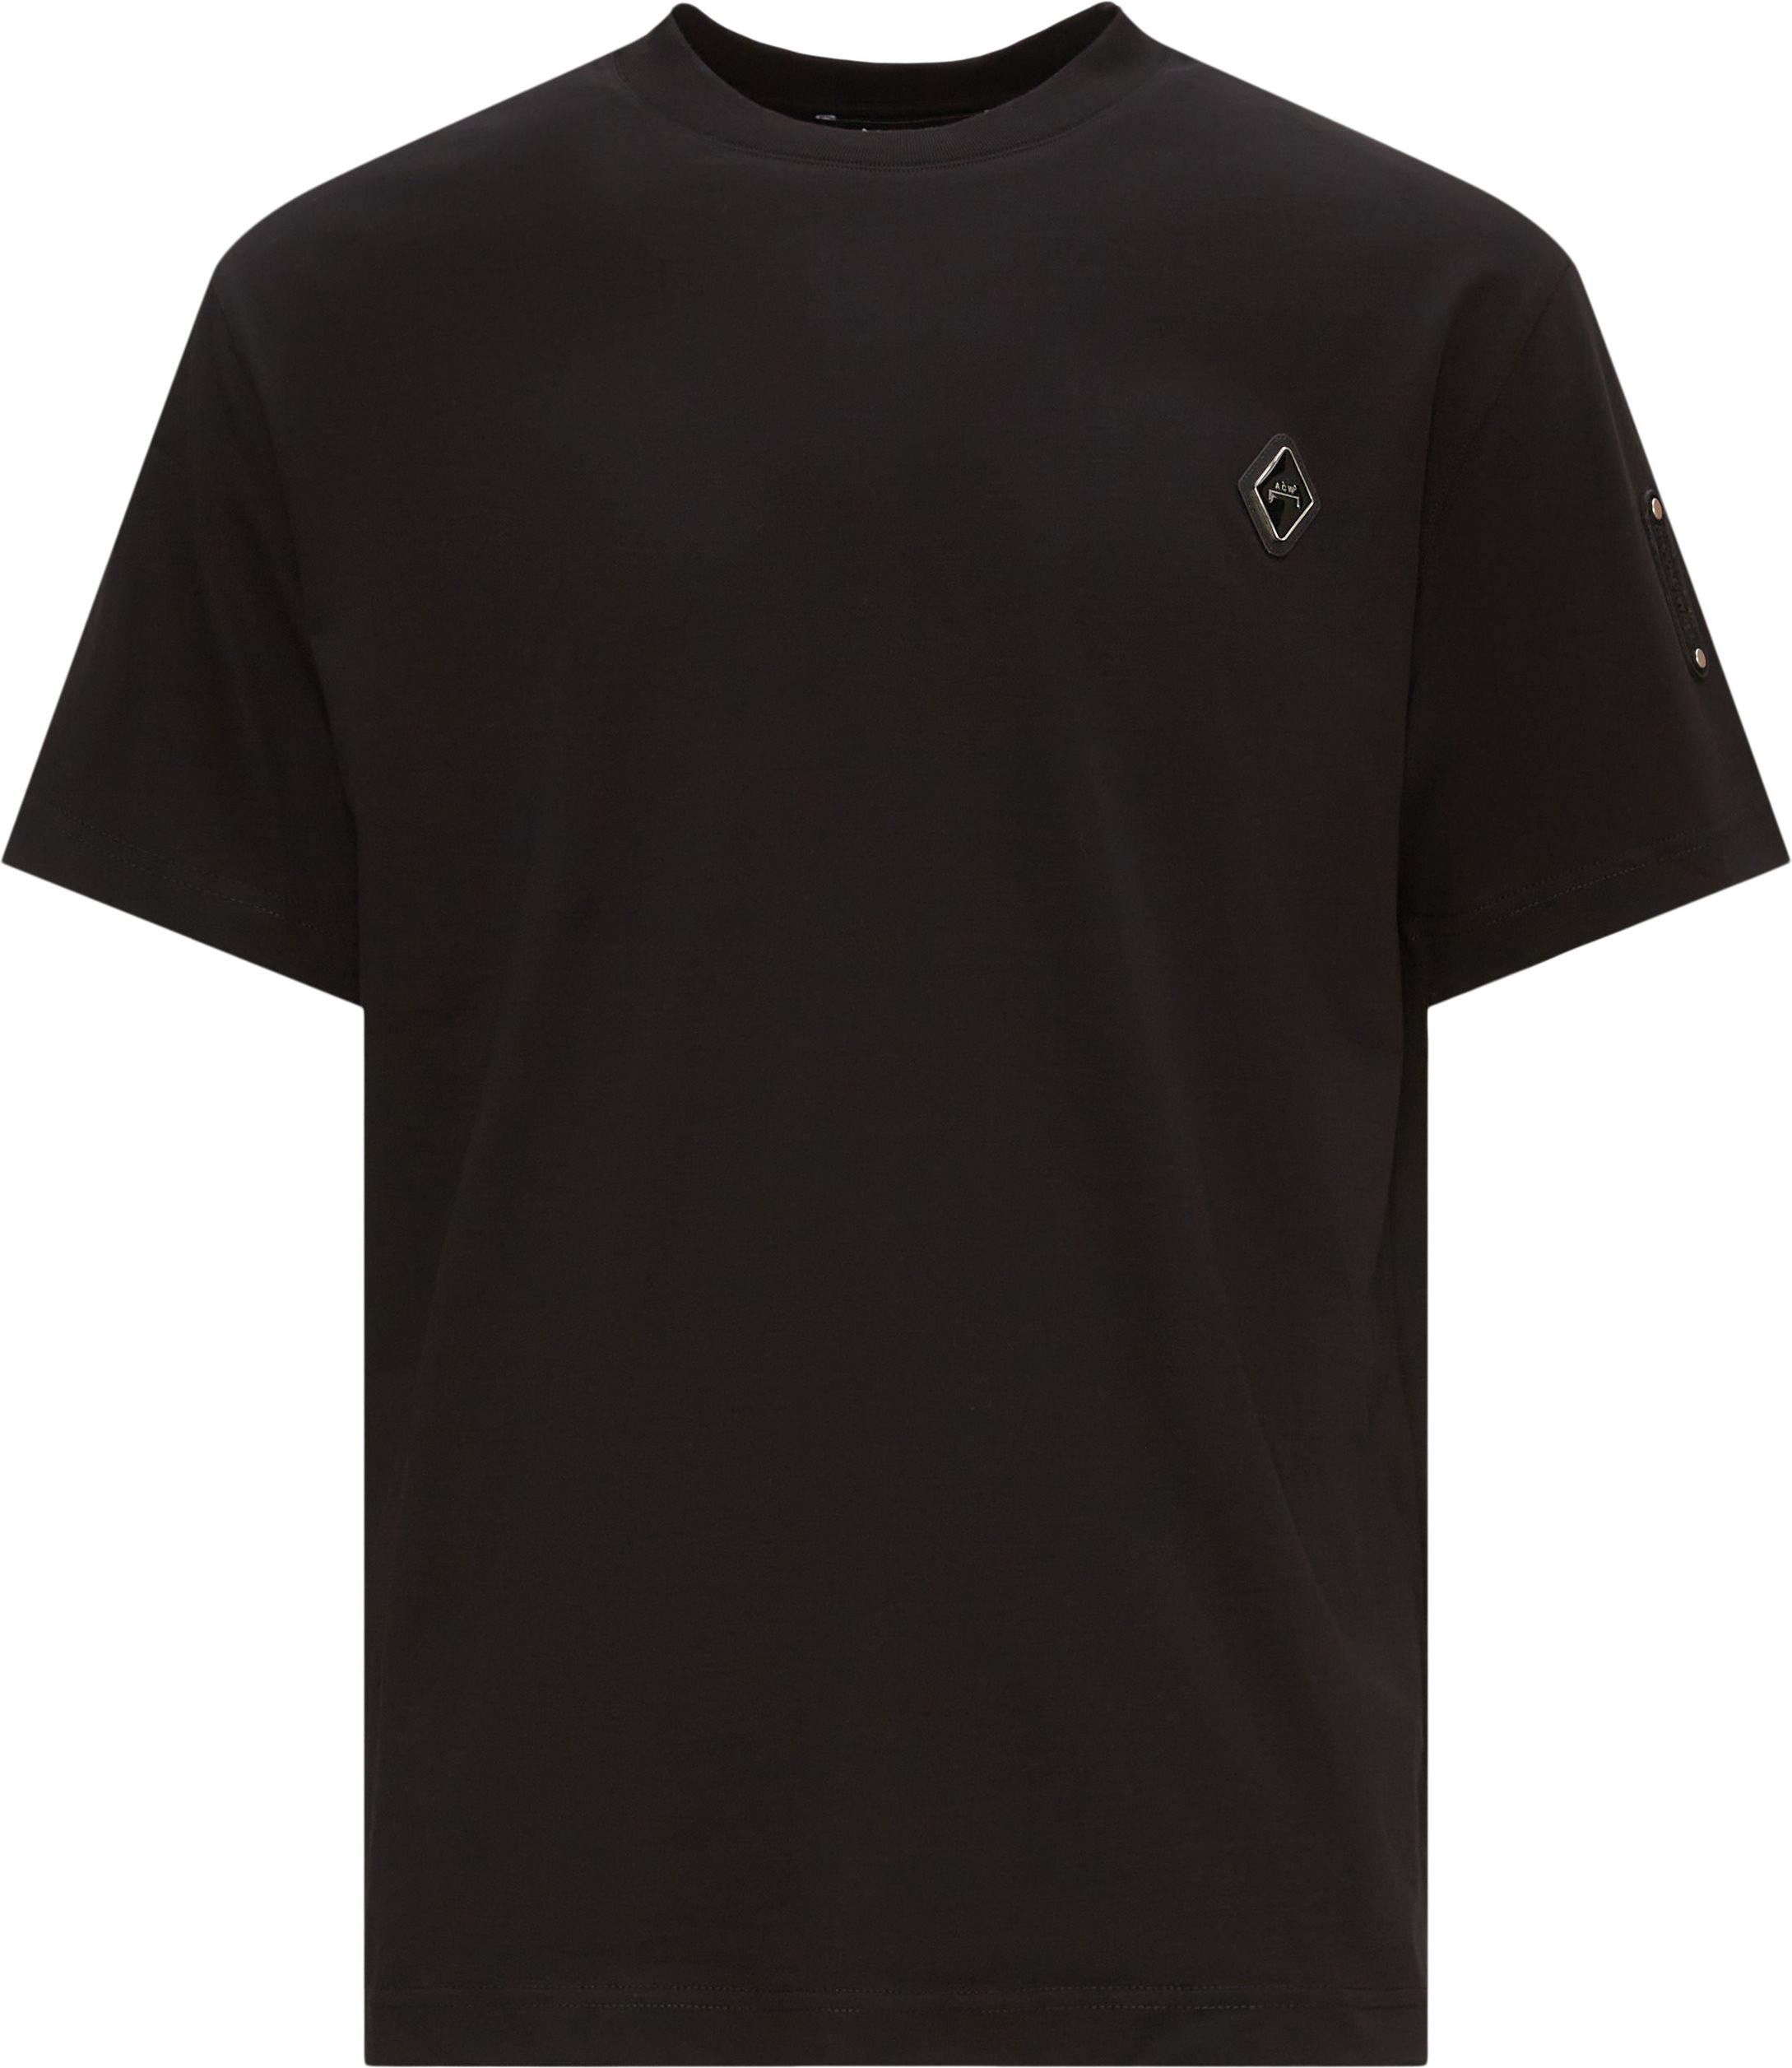 A-COLD-WALL* T-shirts ACWMTS174 RHOMBUS BADGE T Black